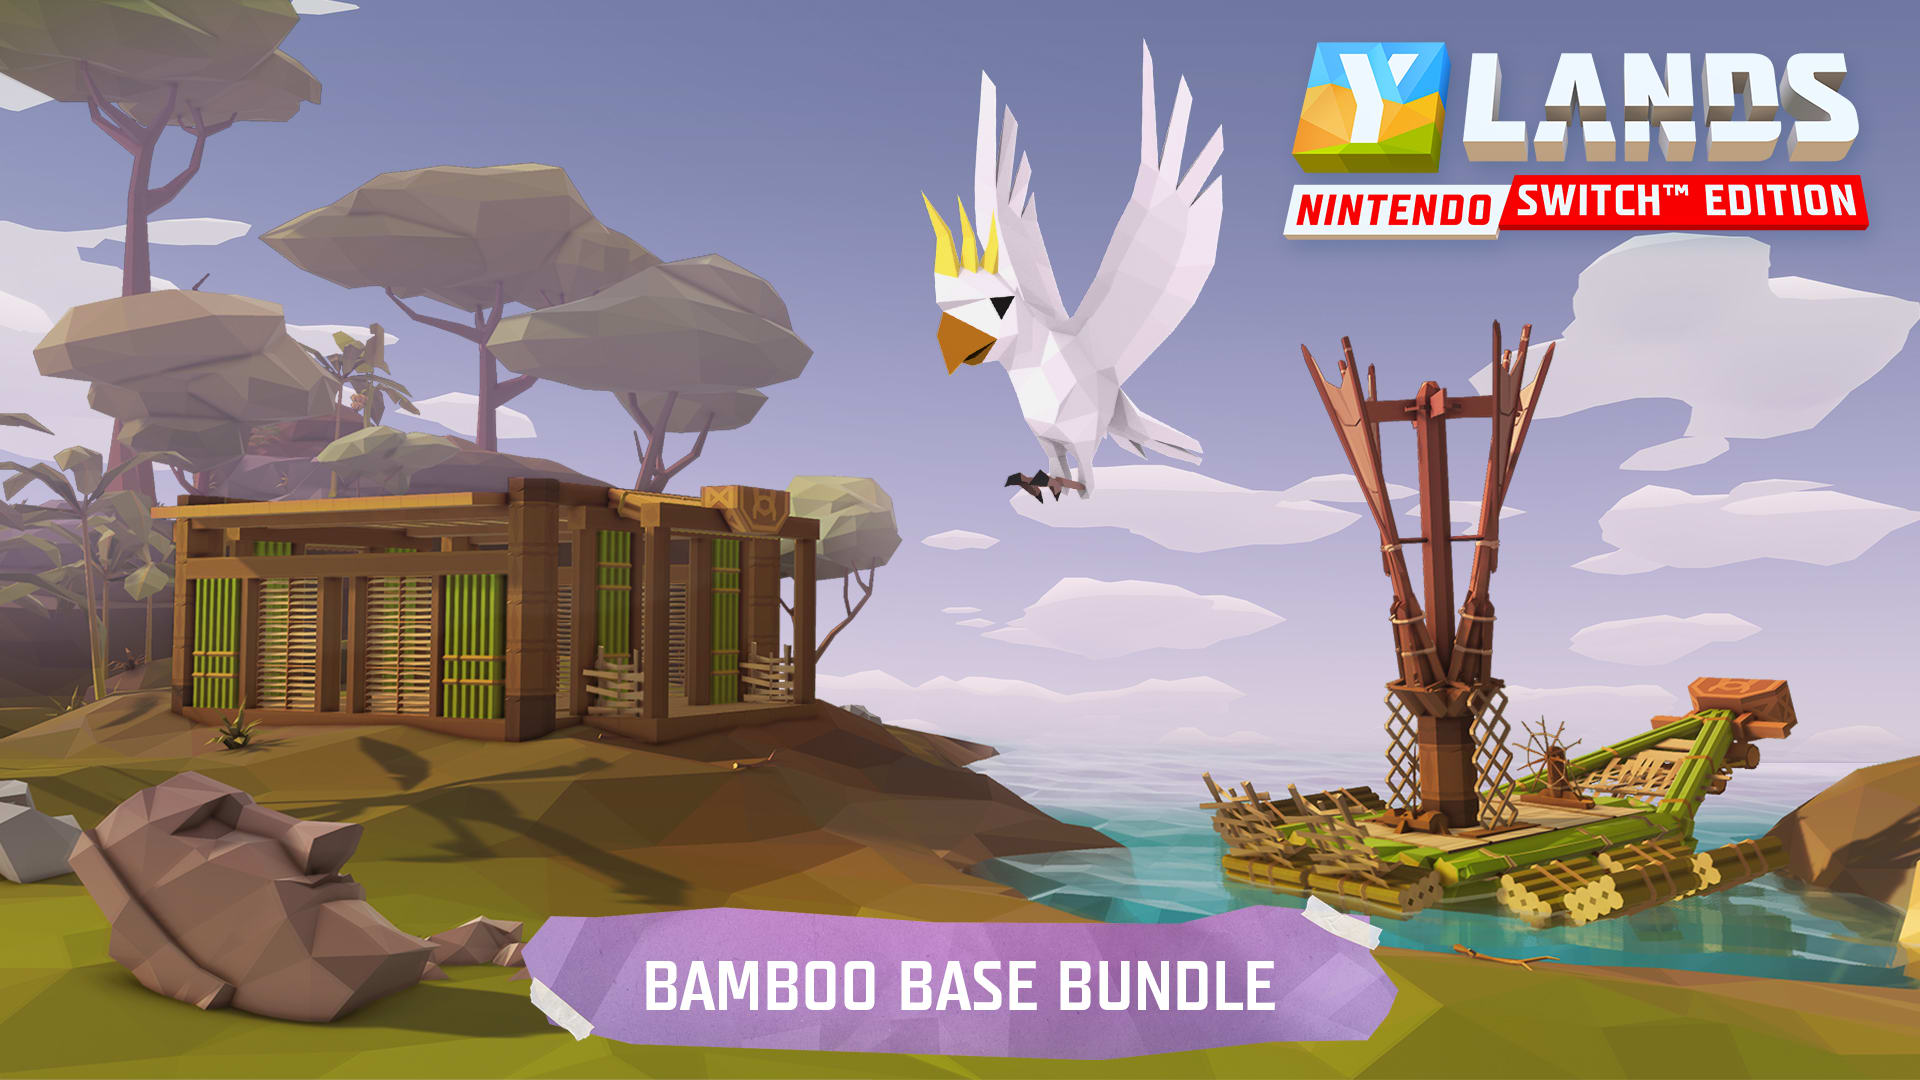 Ylands: Nintendo Switch™ Edition - Lot Bricolage en bambou